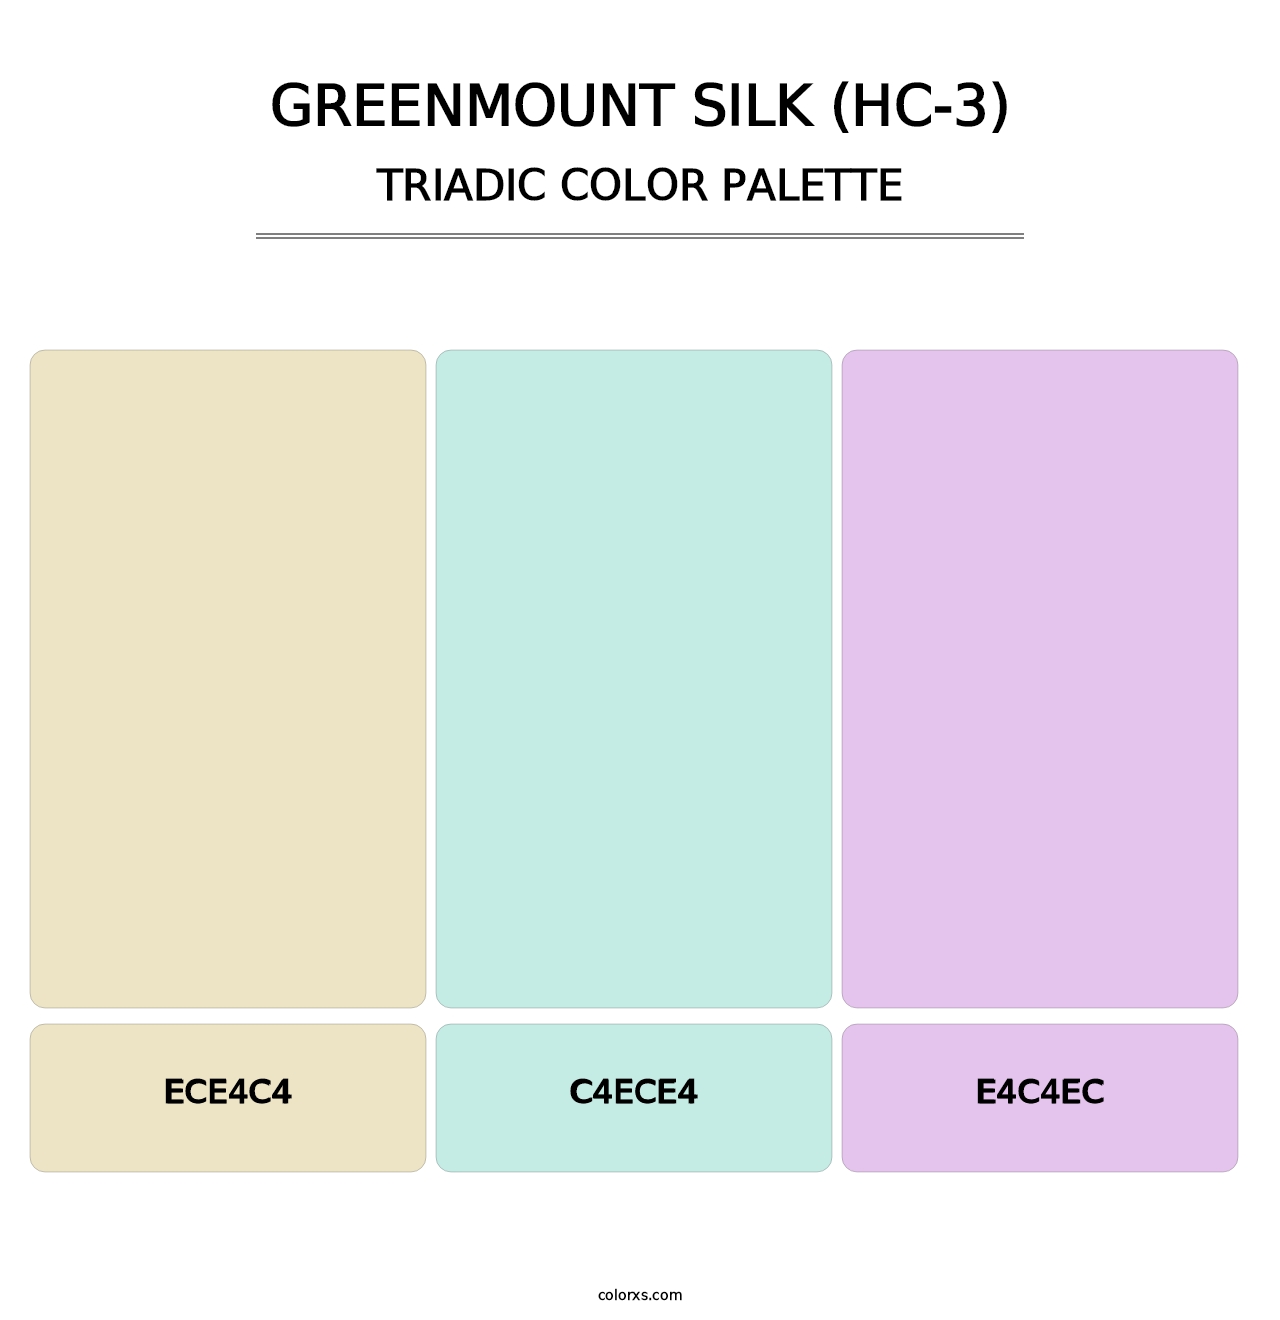 Greenmount Silk (HC-3) - Triadic Color Palette